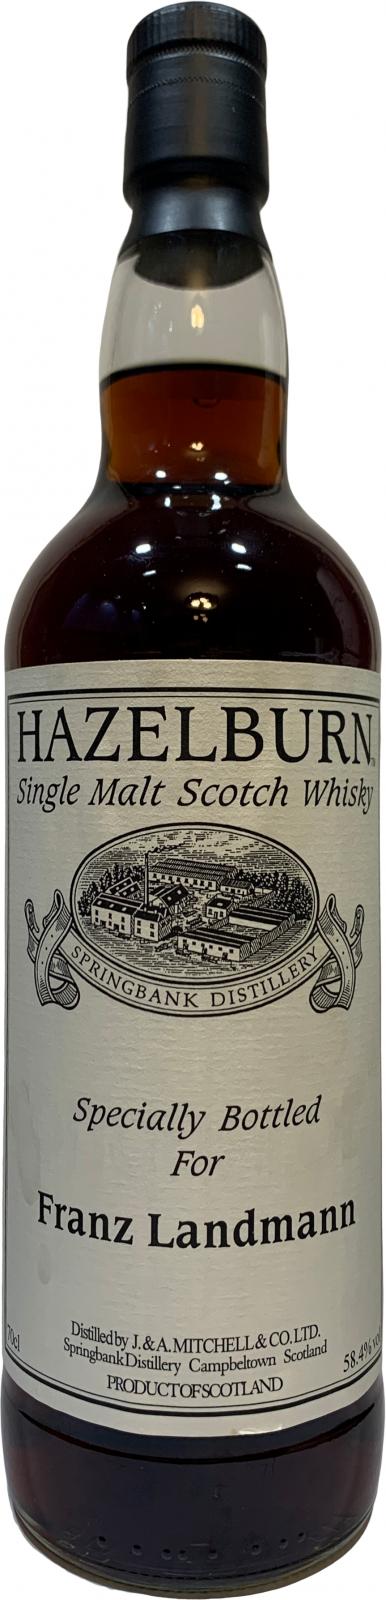 Hazelburn 1997 Private Bottling Fresh Sherry Wood #1038 Franz Landmann 58.4% 700ml